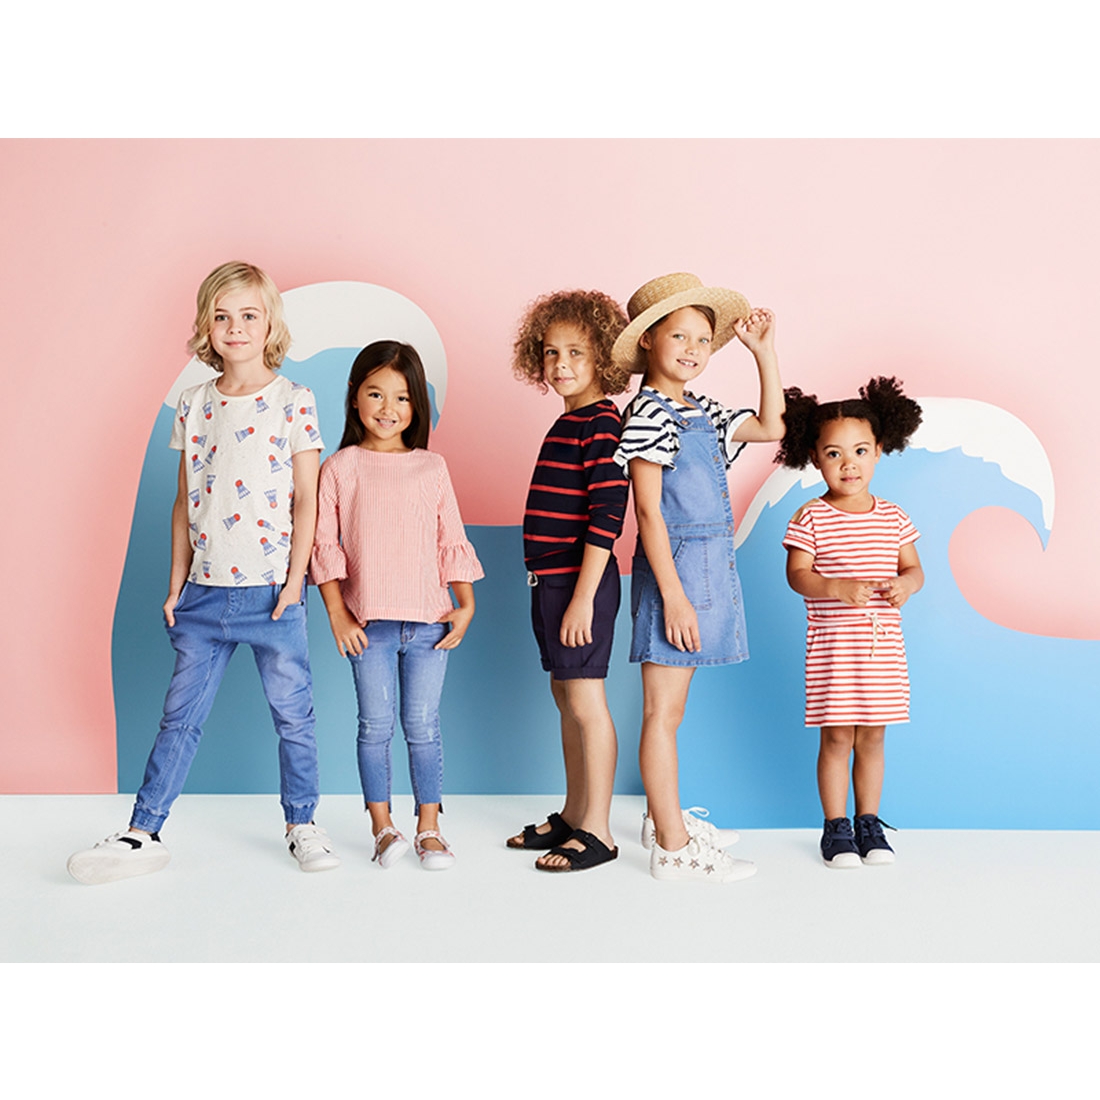 Blog Fashion Kids / We've created the kids fashion blog as a place you